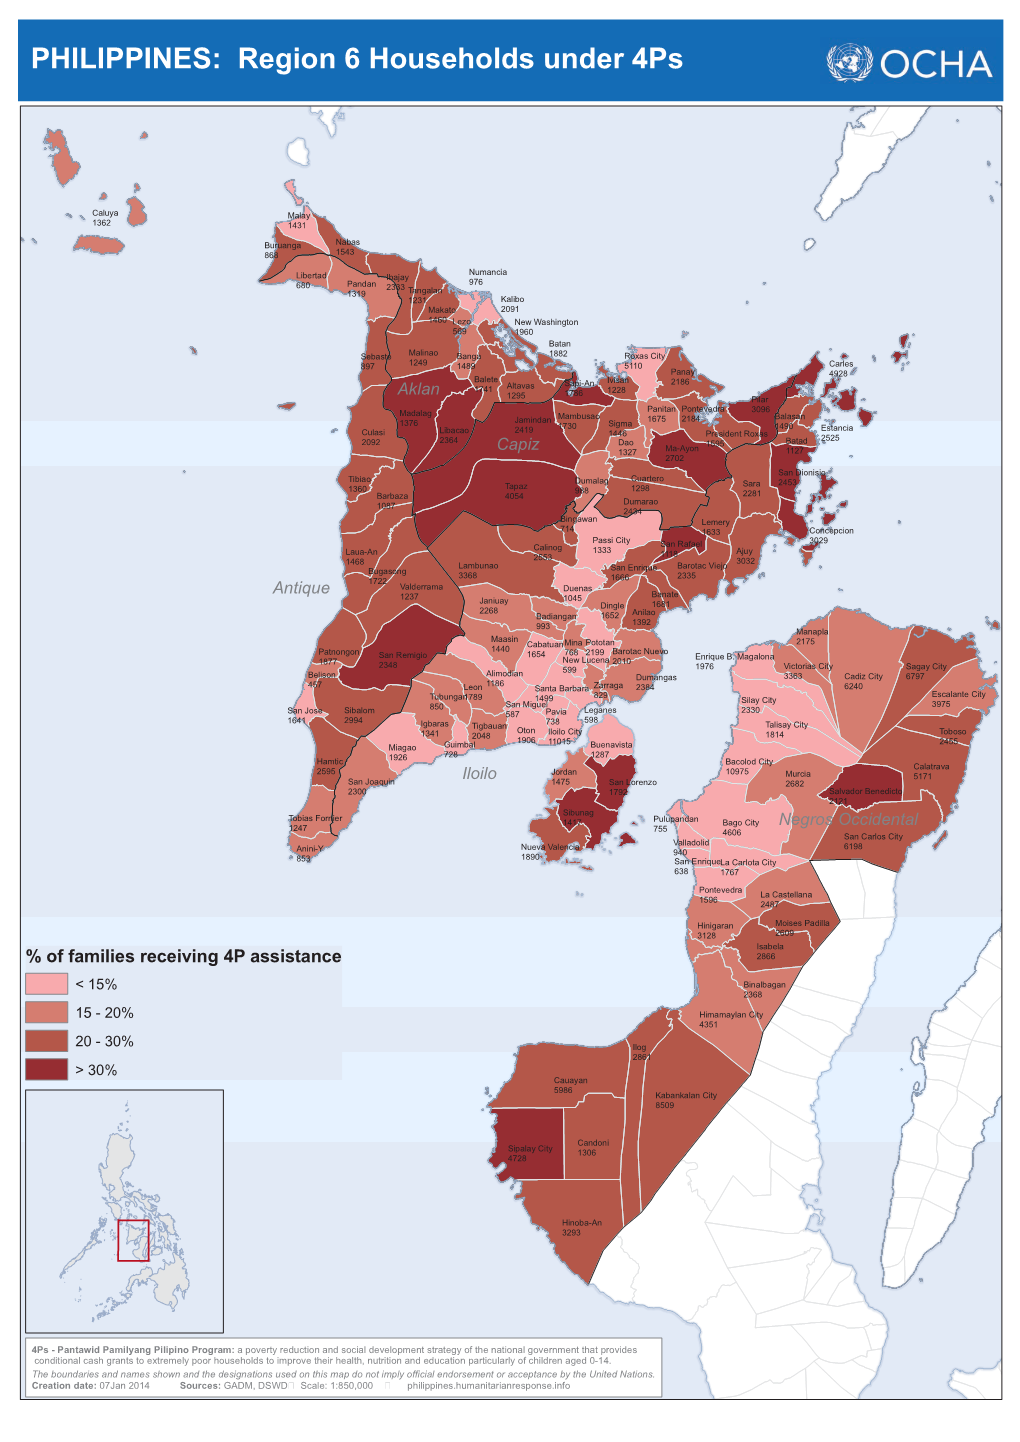 PHILIPPINES: Region 6 Households Under 4Ps